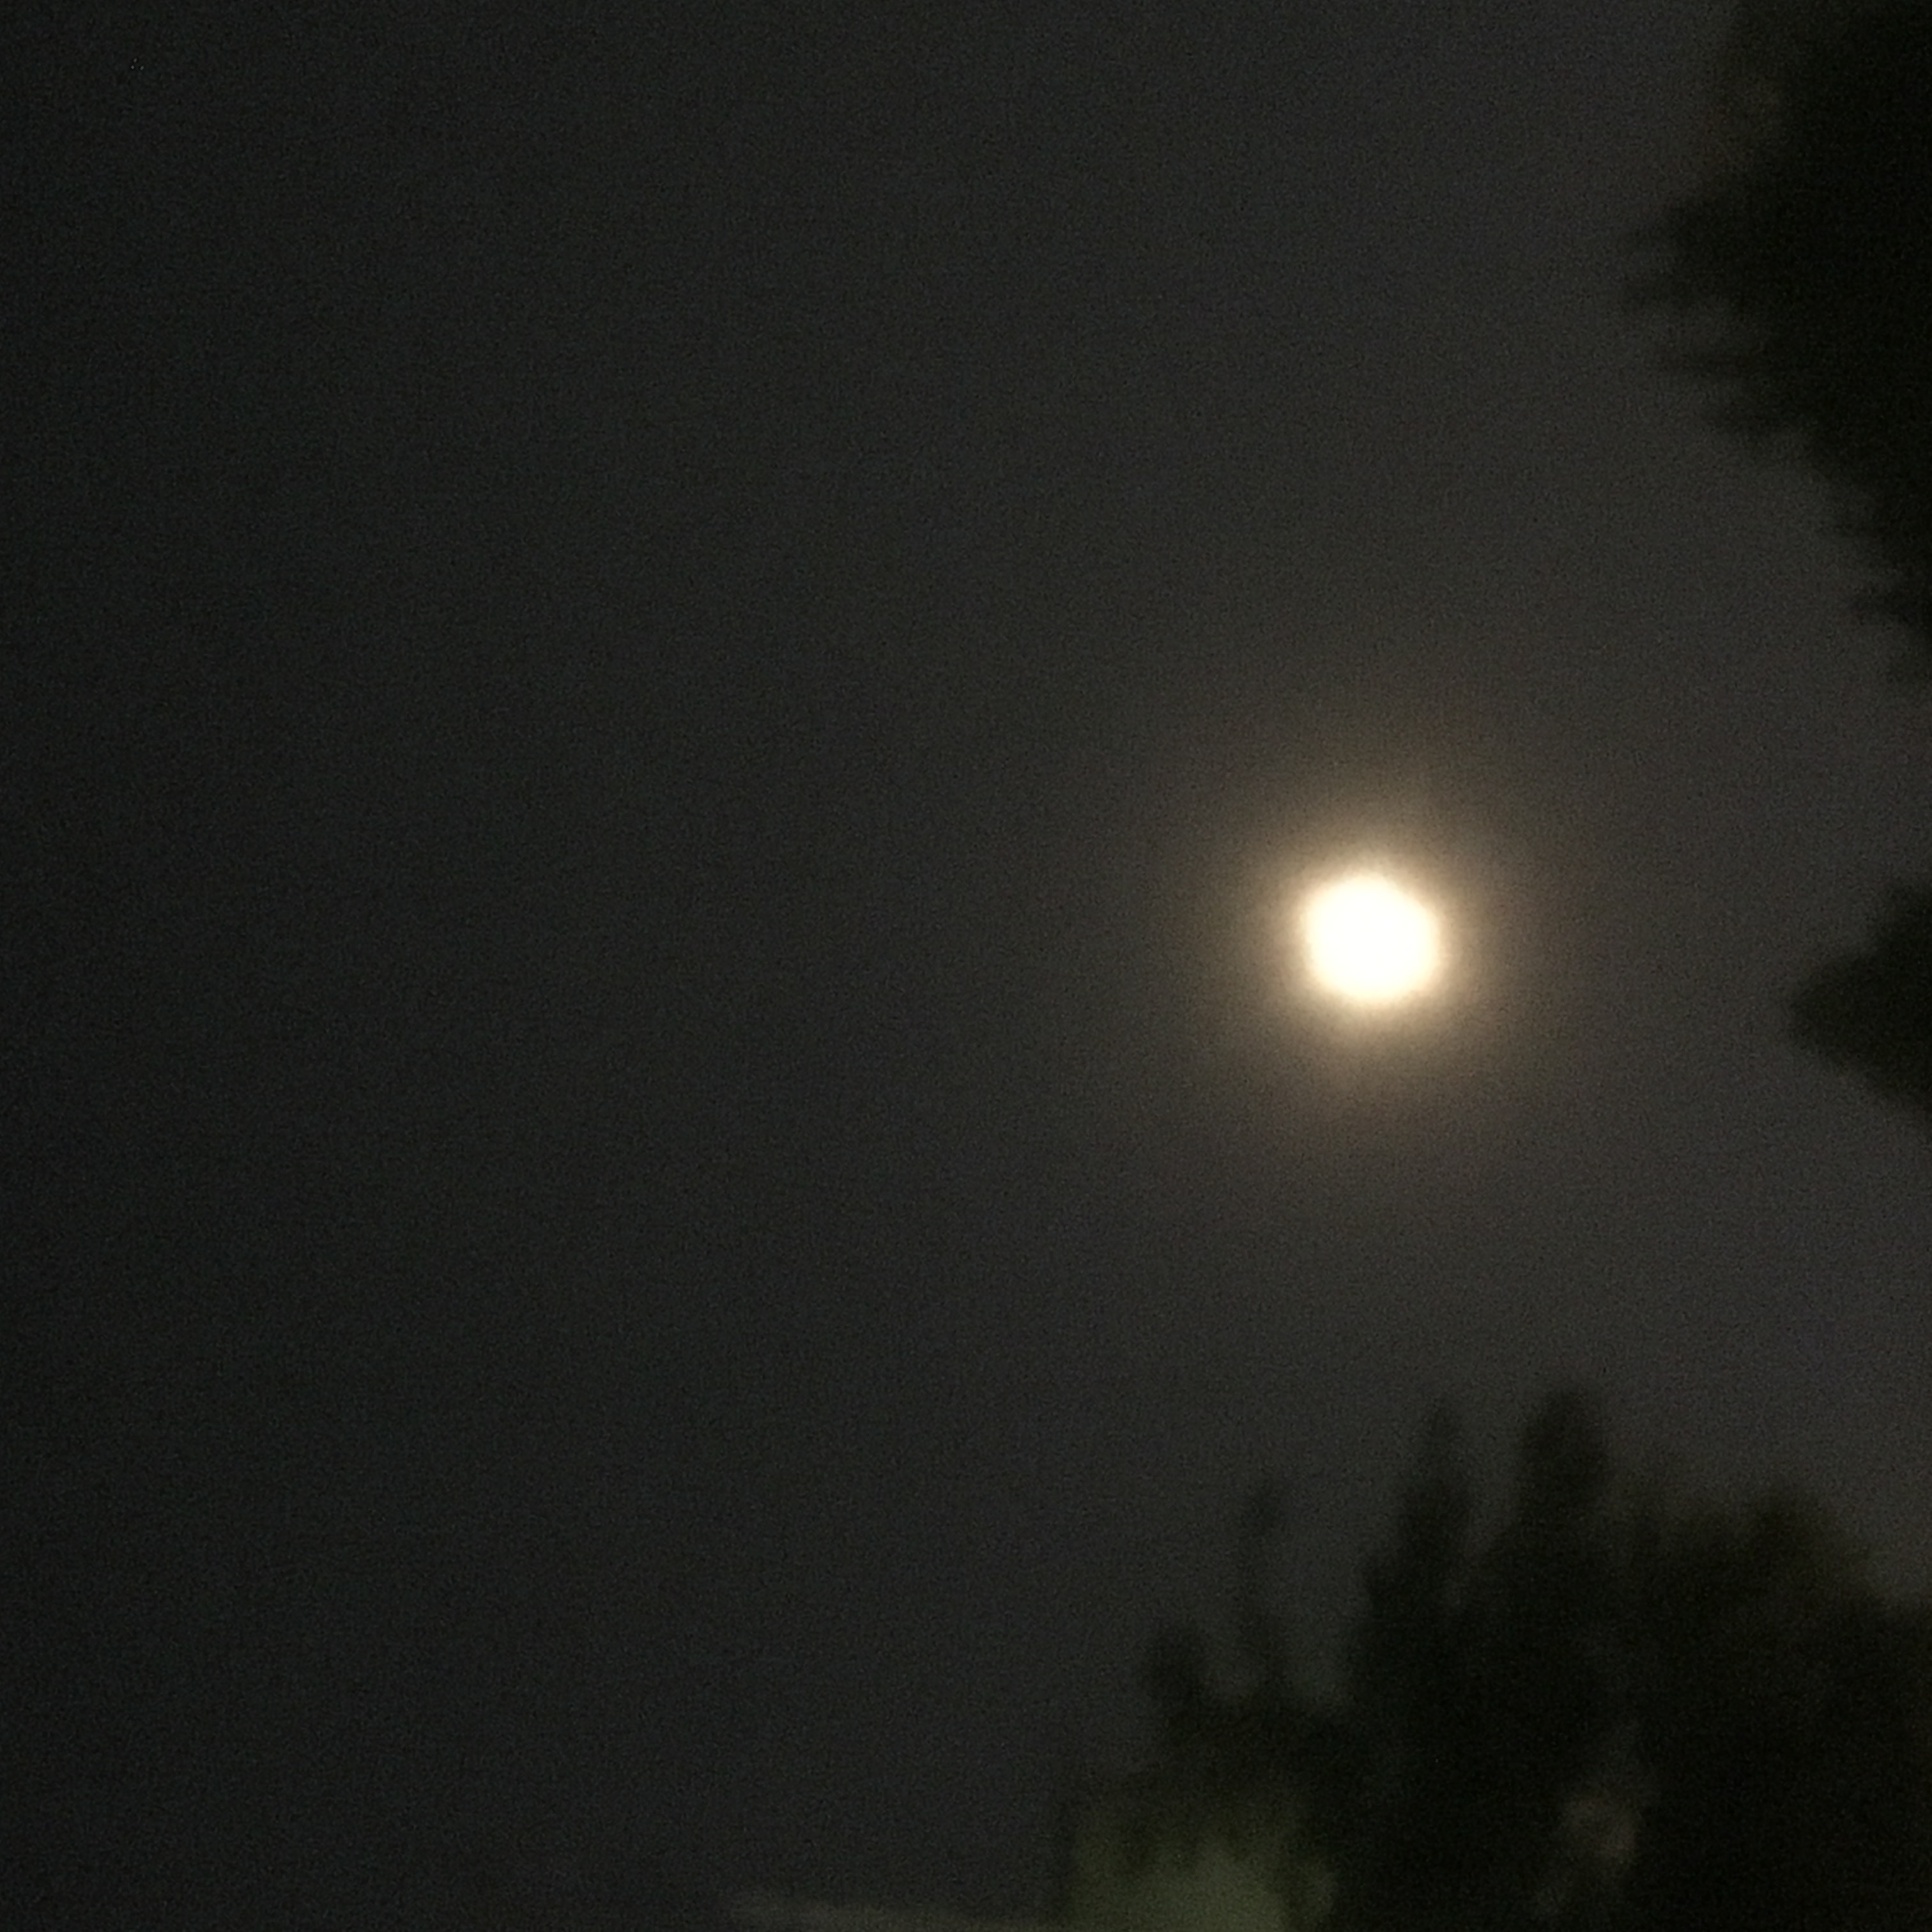 image.jpeg : 보름달